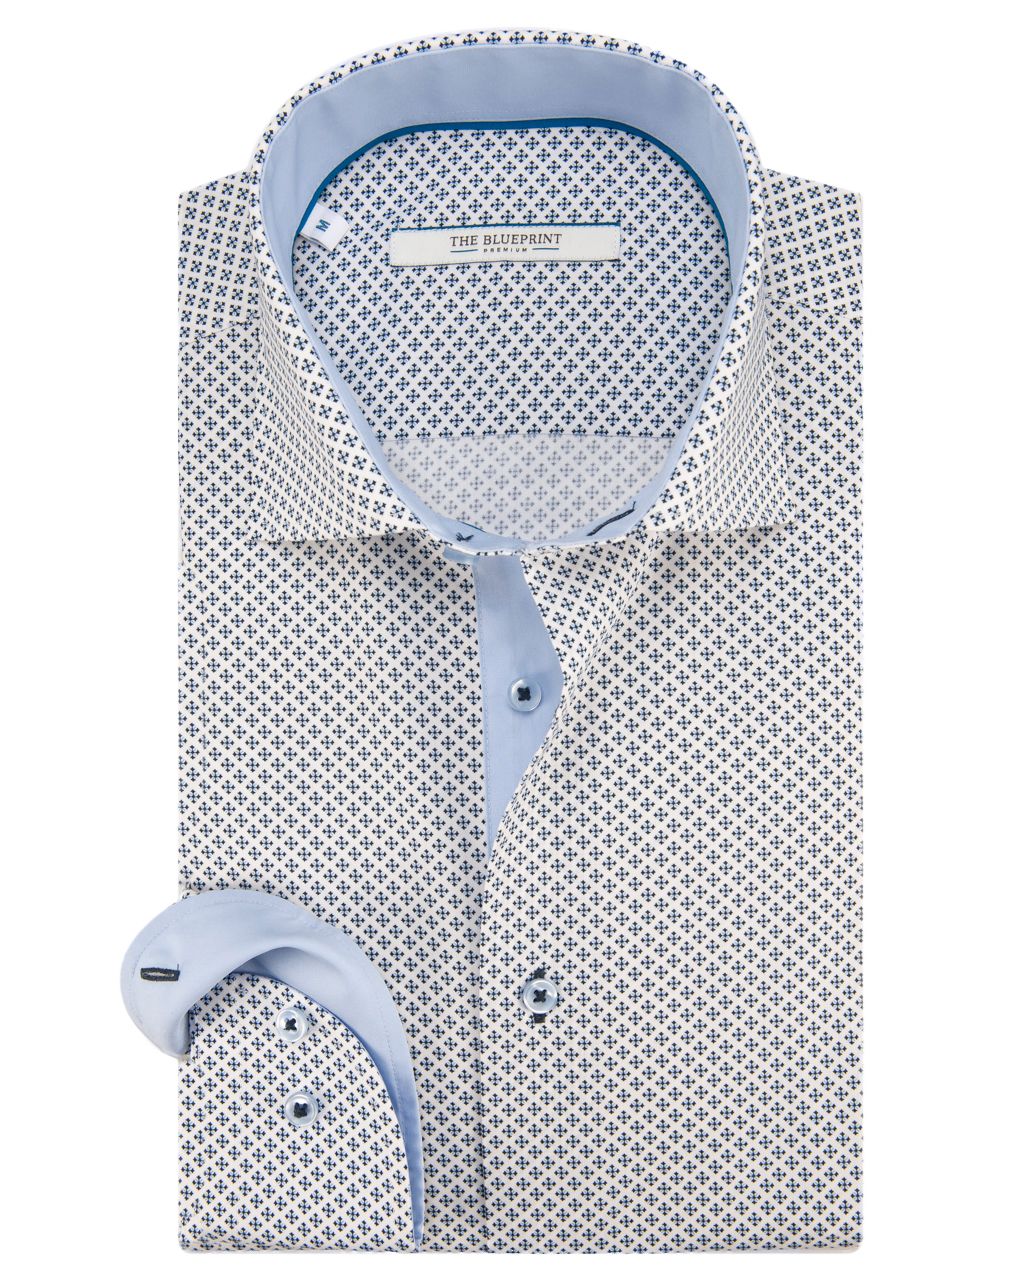 The BLUEPRINT Premium Trendy overhemd LM Wit dessin 054043-001-L